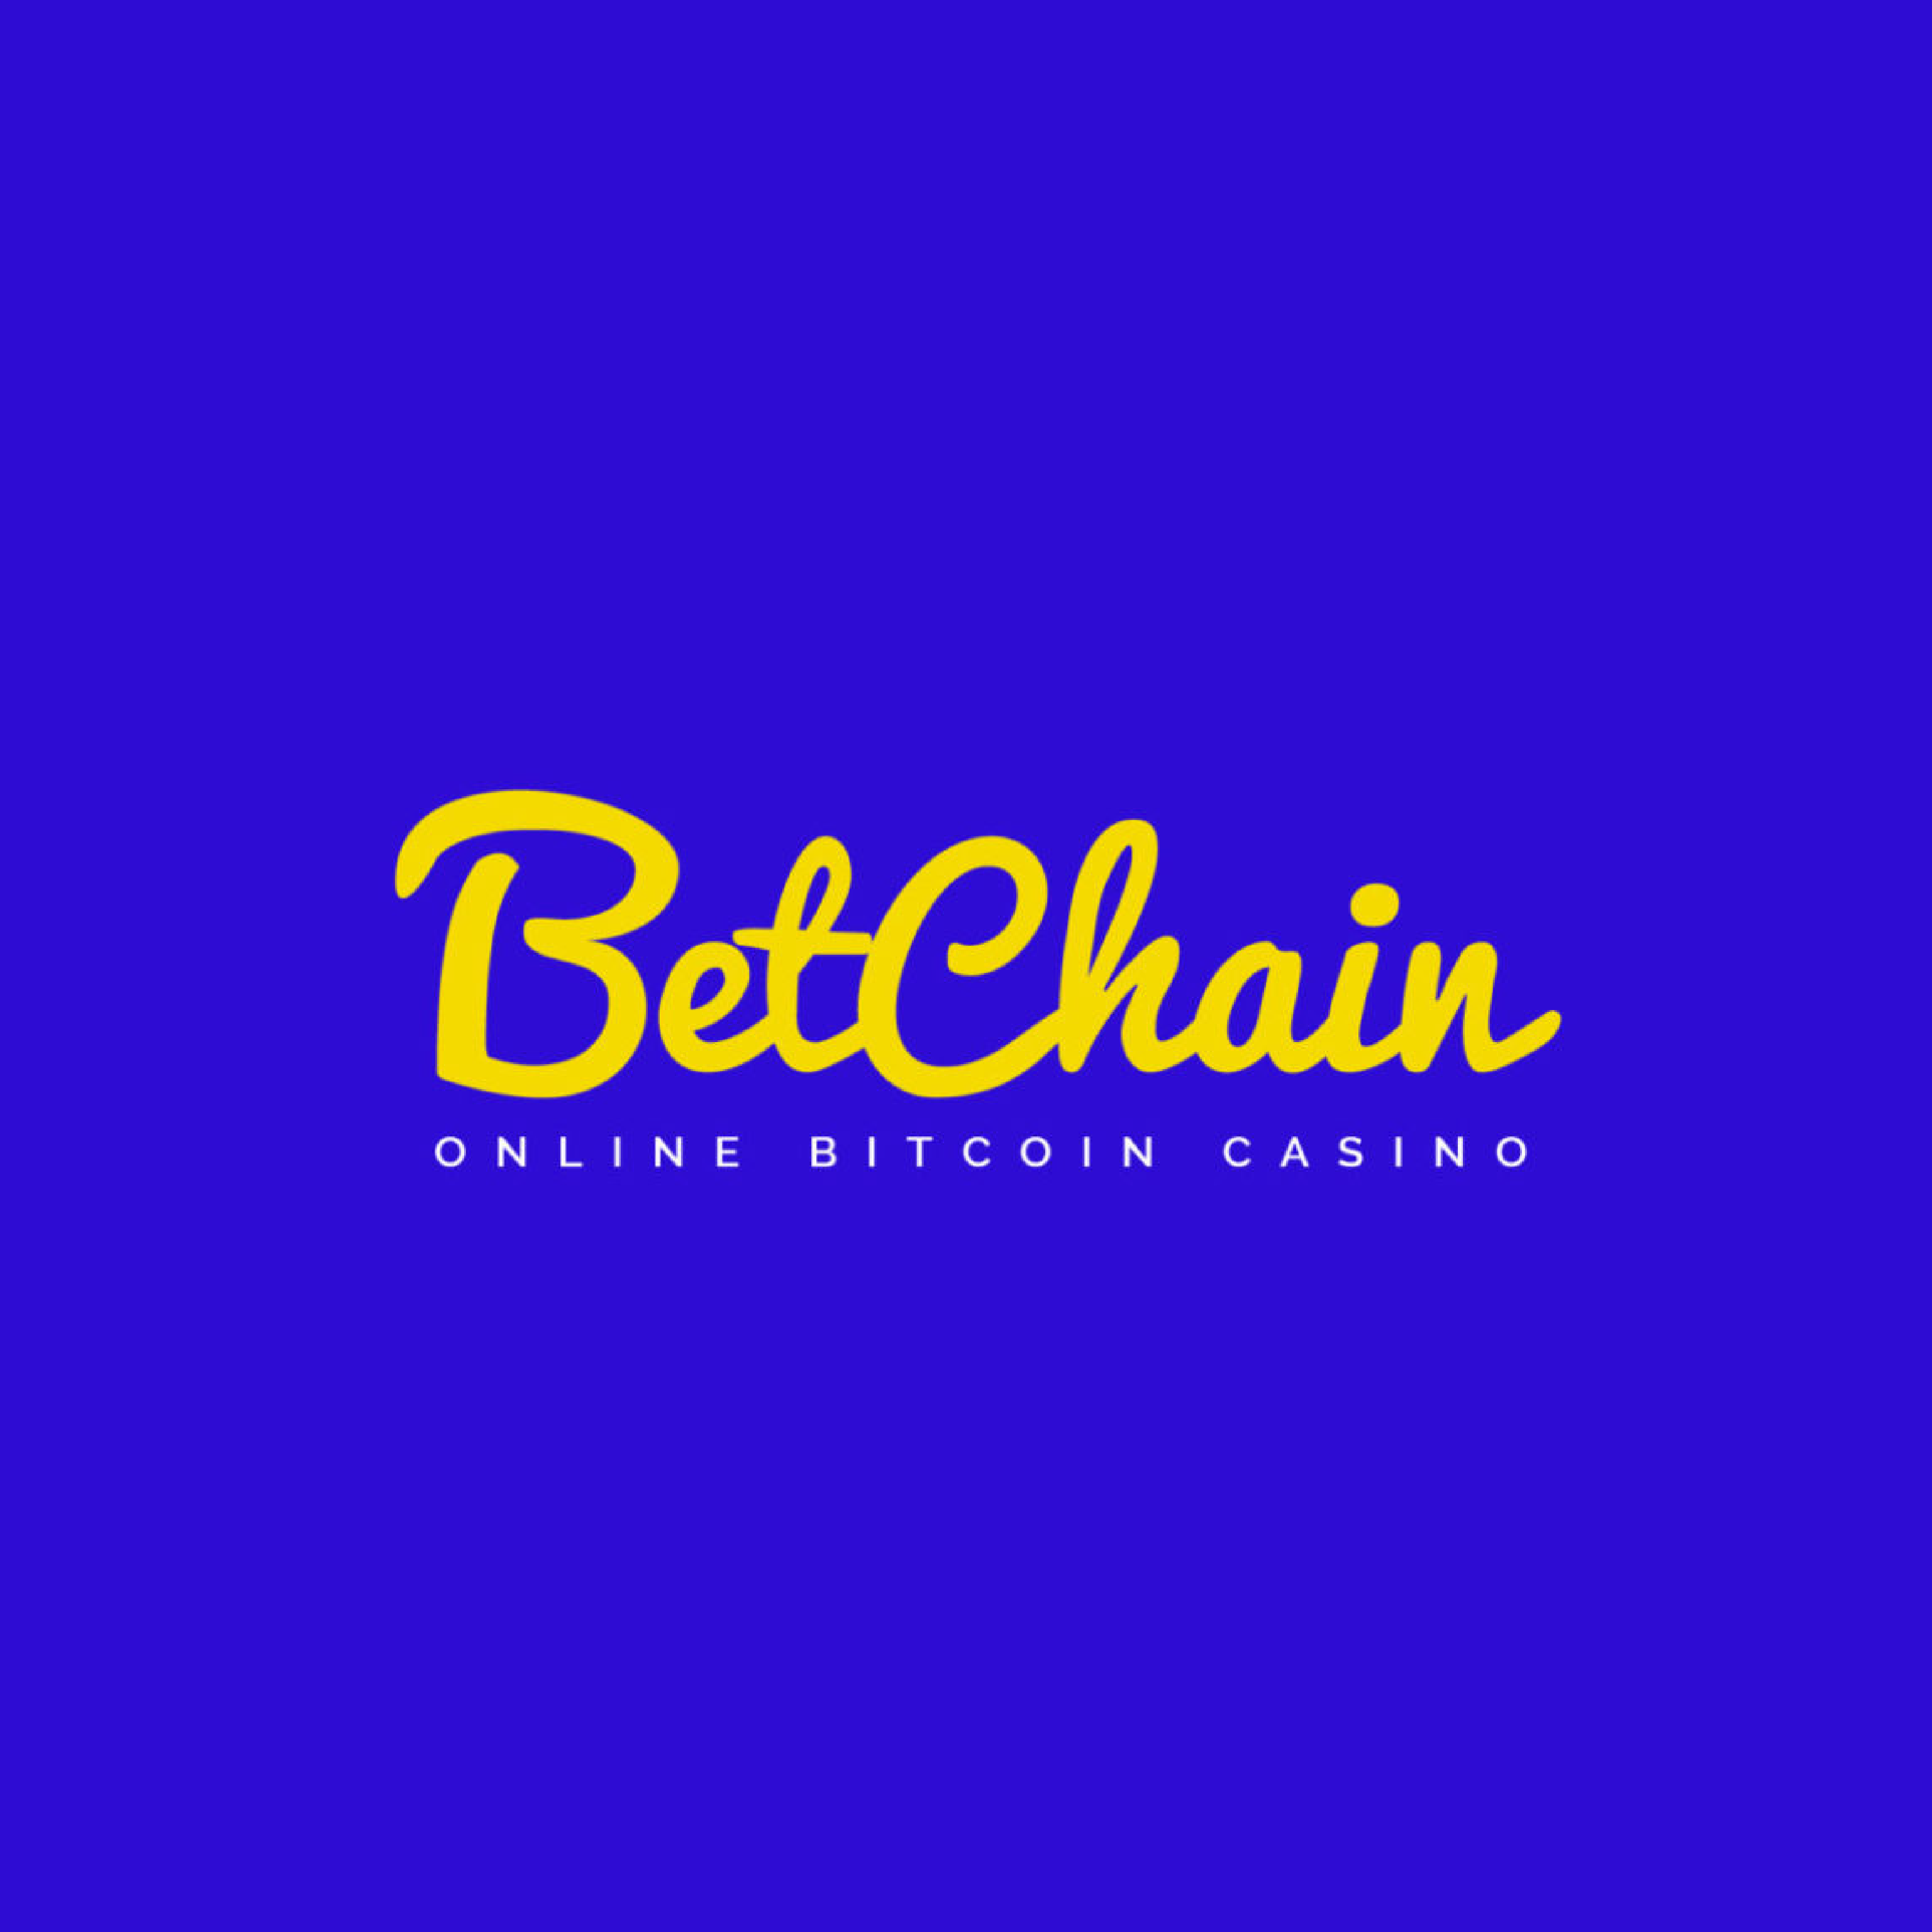 Online bitcoin casinos live bitcoin roulette